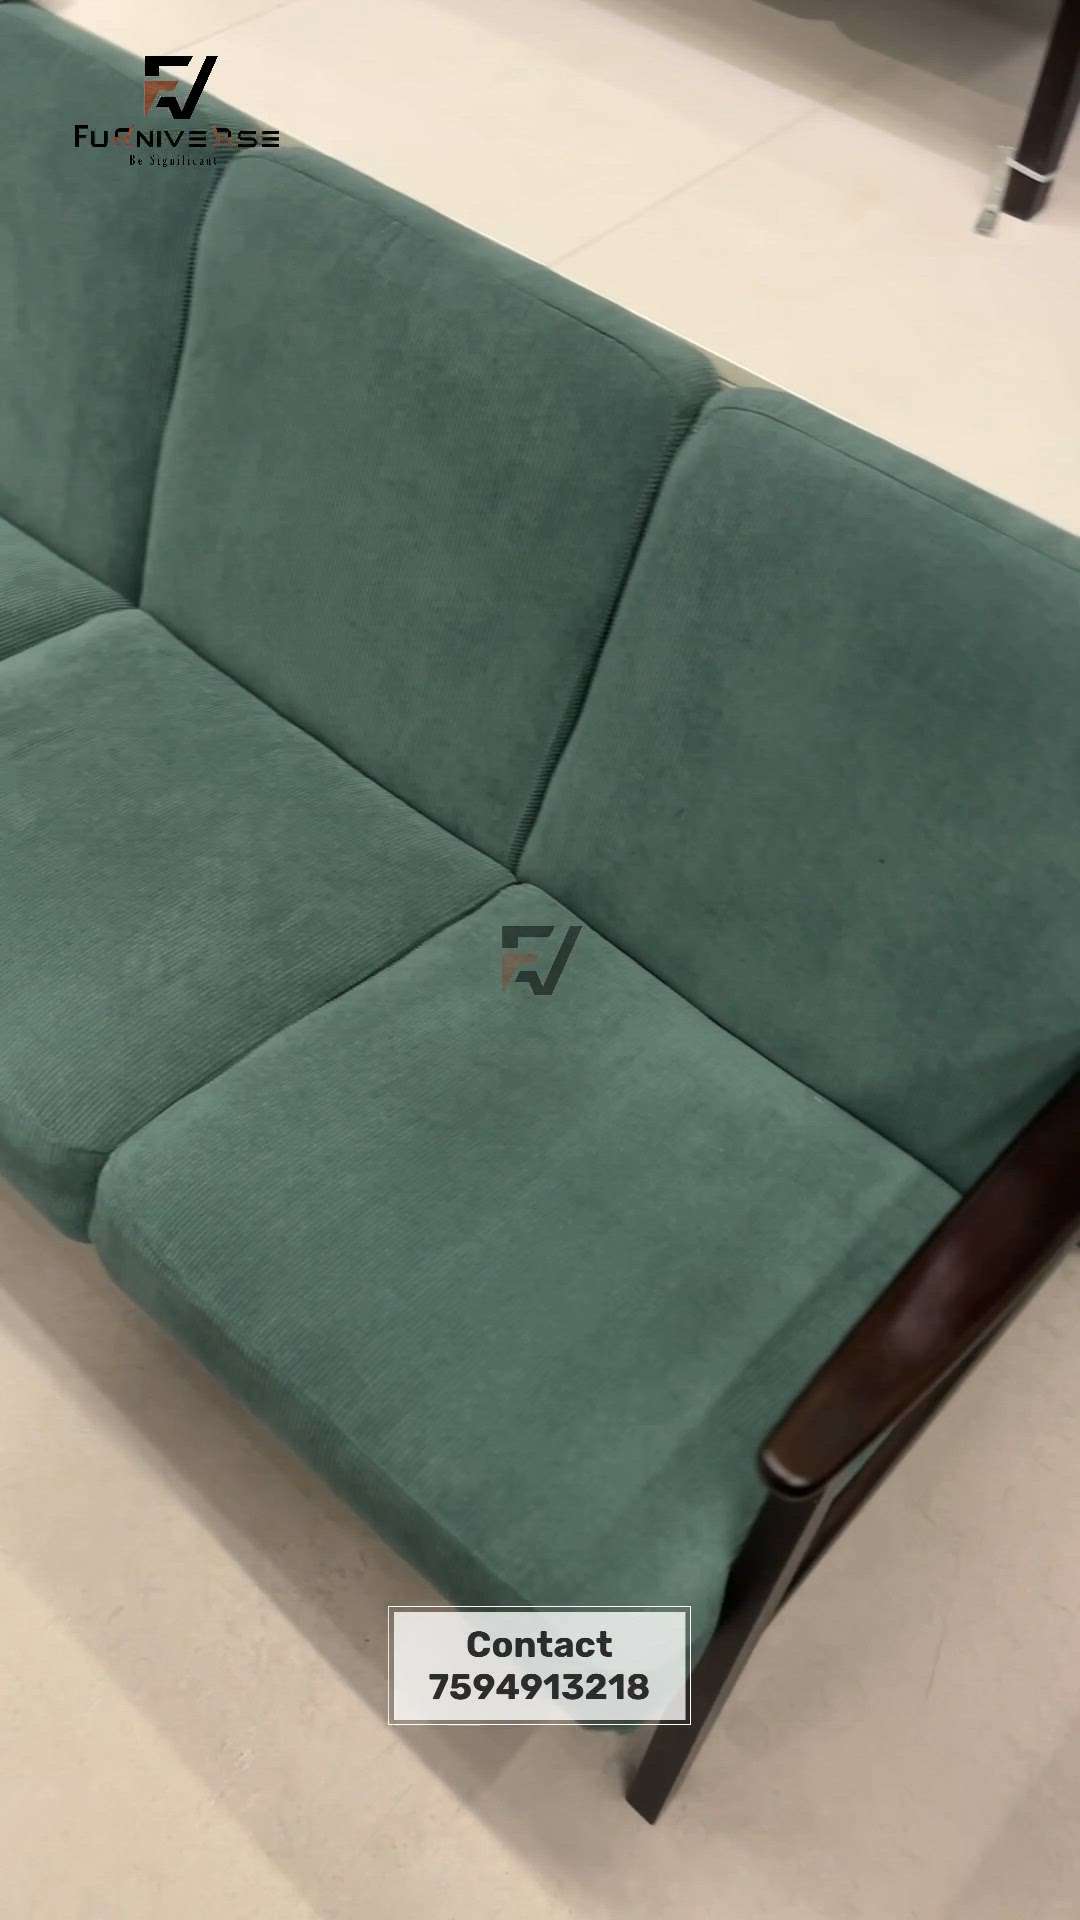 3 Seater Sofa 👍
 contact:7594913218










































 #LivingRoomSofa #Sofas  #SleeperSofa  #LeatherSofa  #NEW_SOFA  #LUXURY_SOFA  #sofaset  #sofacleaning  #sofashampooing  #sofamalaysia  #Sofa_  #sofadesign #sofacloth  #furniturefabric  #furnitureanddiningtable  #furniture   #Furnishings  #furnitureideas  #furniturestore  #furnituredesigner  #furniturework  #IndoorPlants  #LivingroomDesigns  #LivingRoomSofa  #LivingRoomIdeas  #roomsdesign  #LivingRoomTable